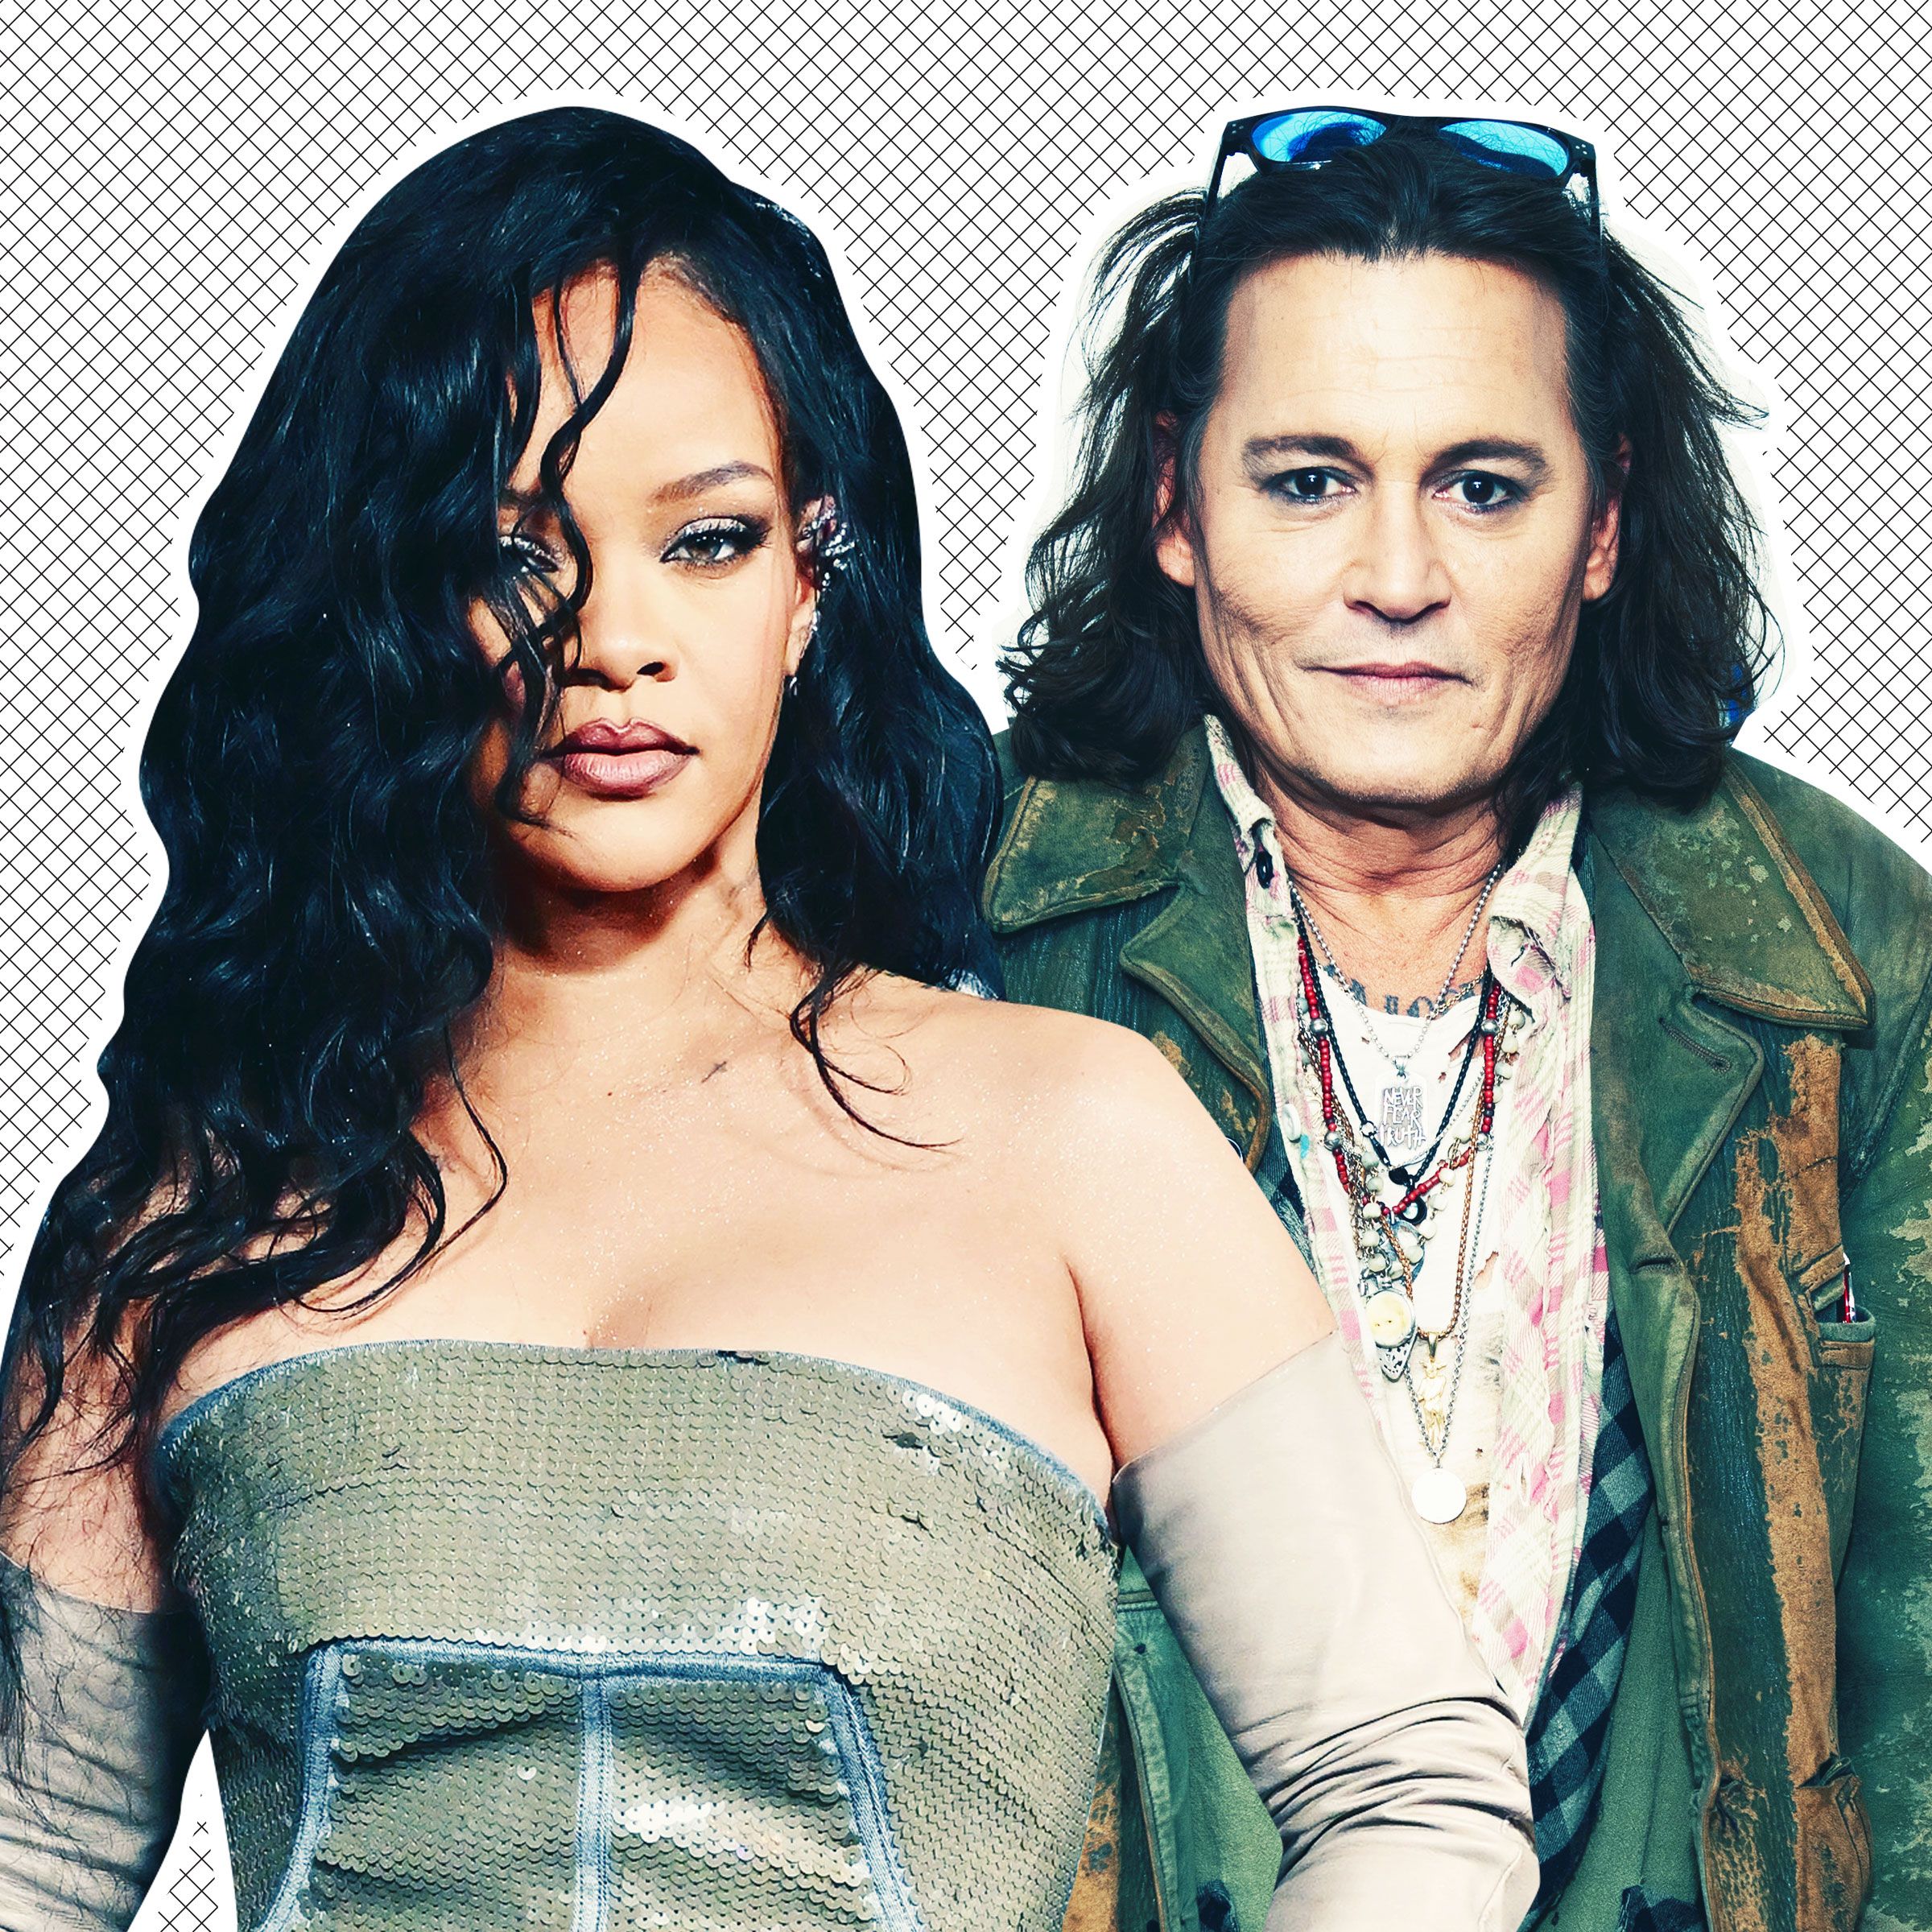 Real Reps Stori Tub Com - Rihanna to Give Johnny Depp Guest Slot at Fenty Show: Report